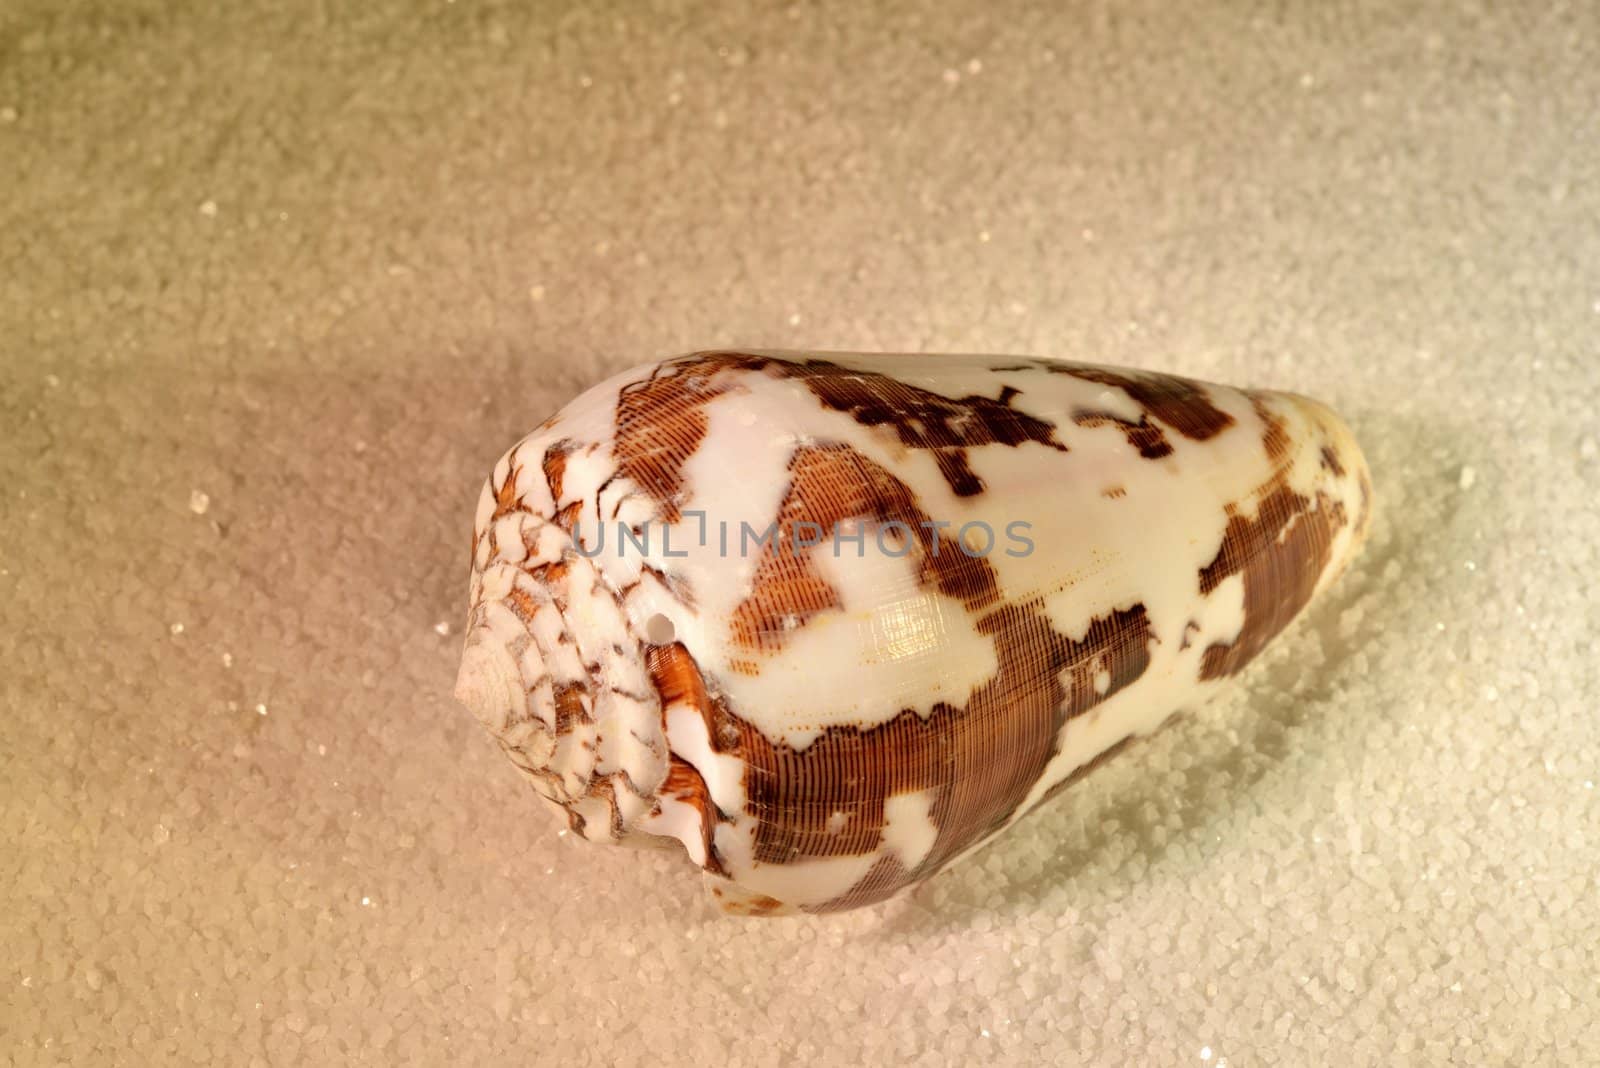 A sea shell on a light sand background